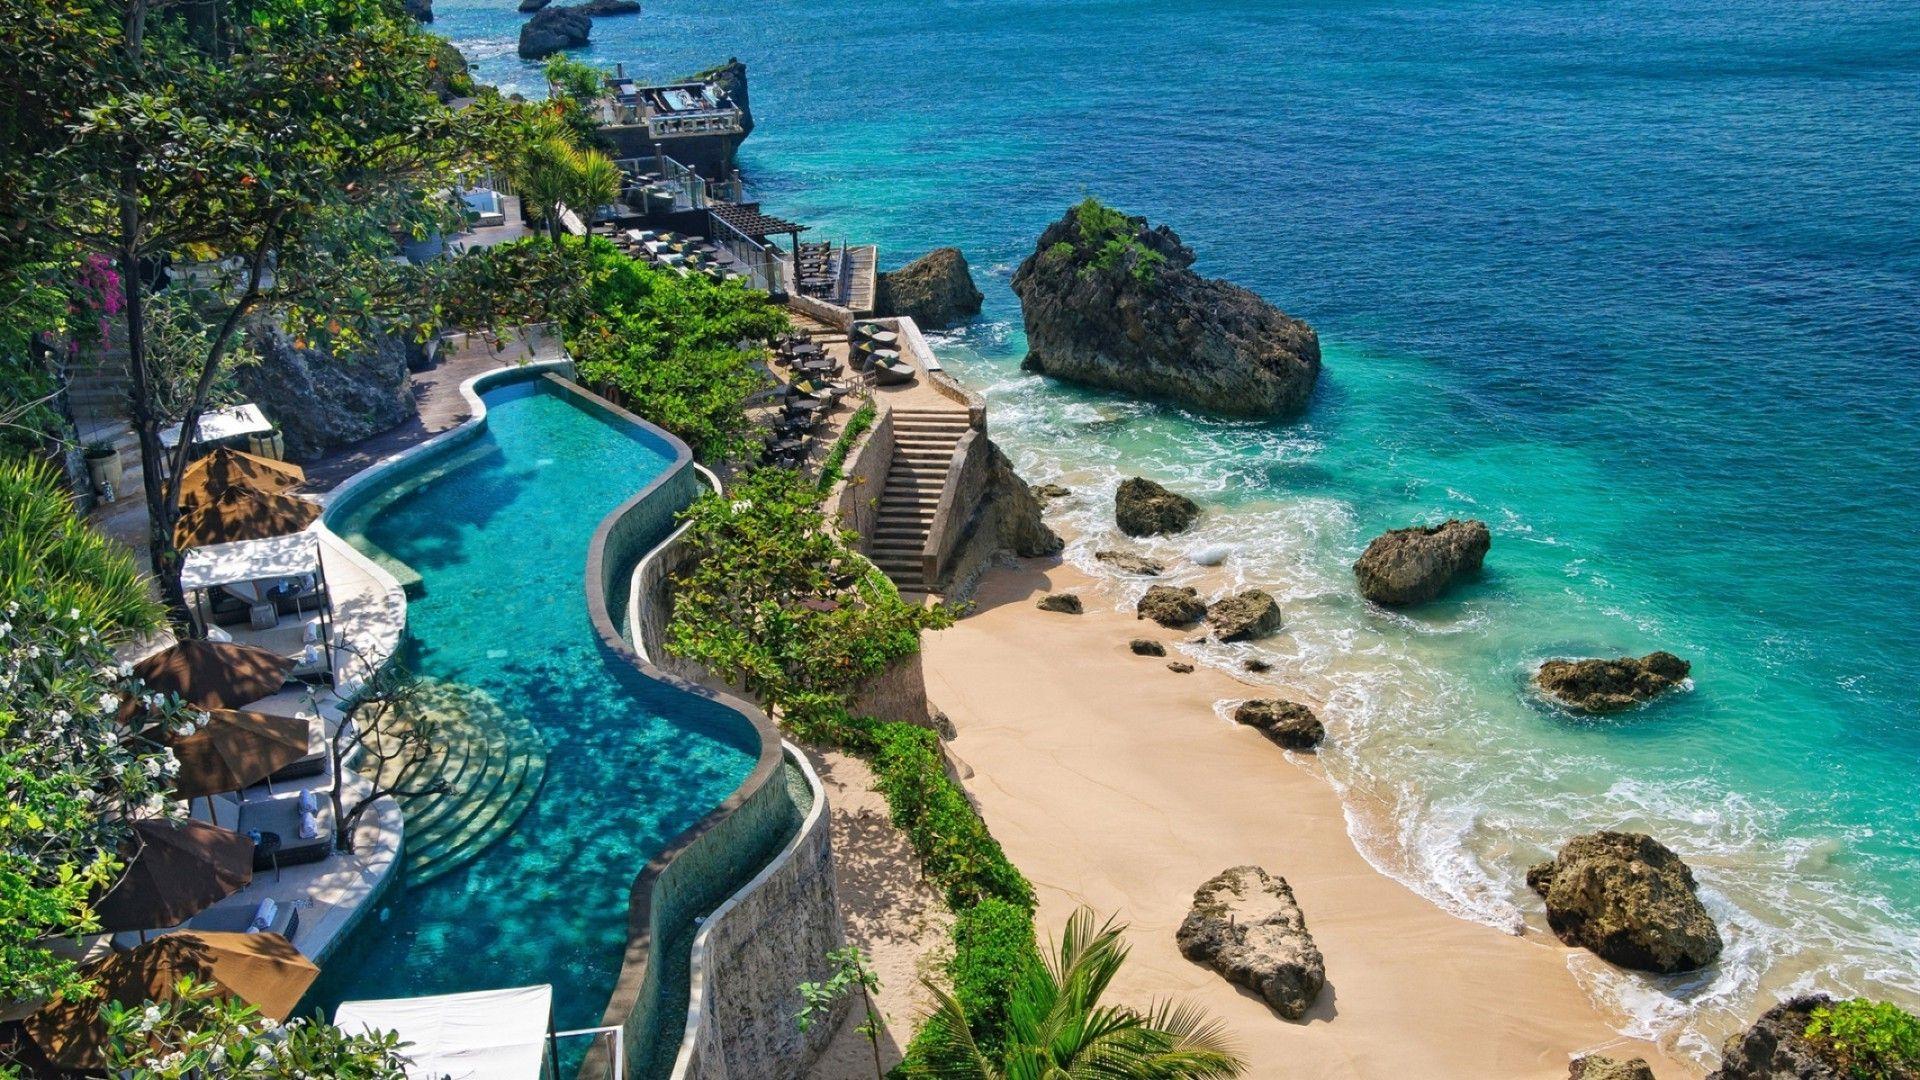 Bali Desktop Wallpapers Top Free Bali Desktop Backgrounds